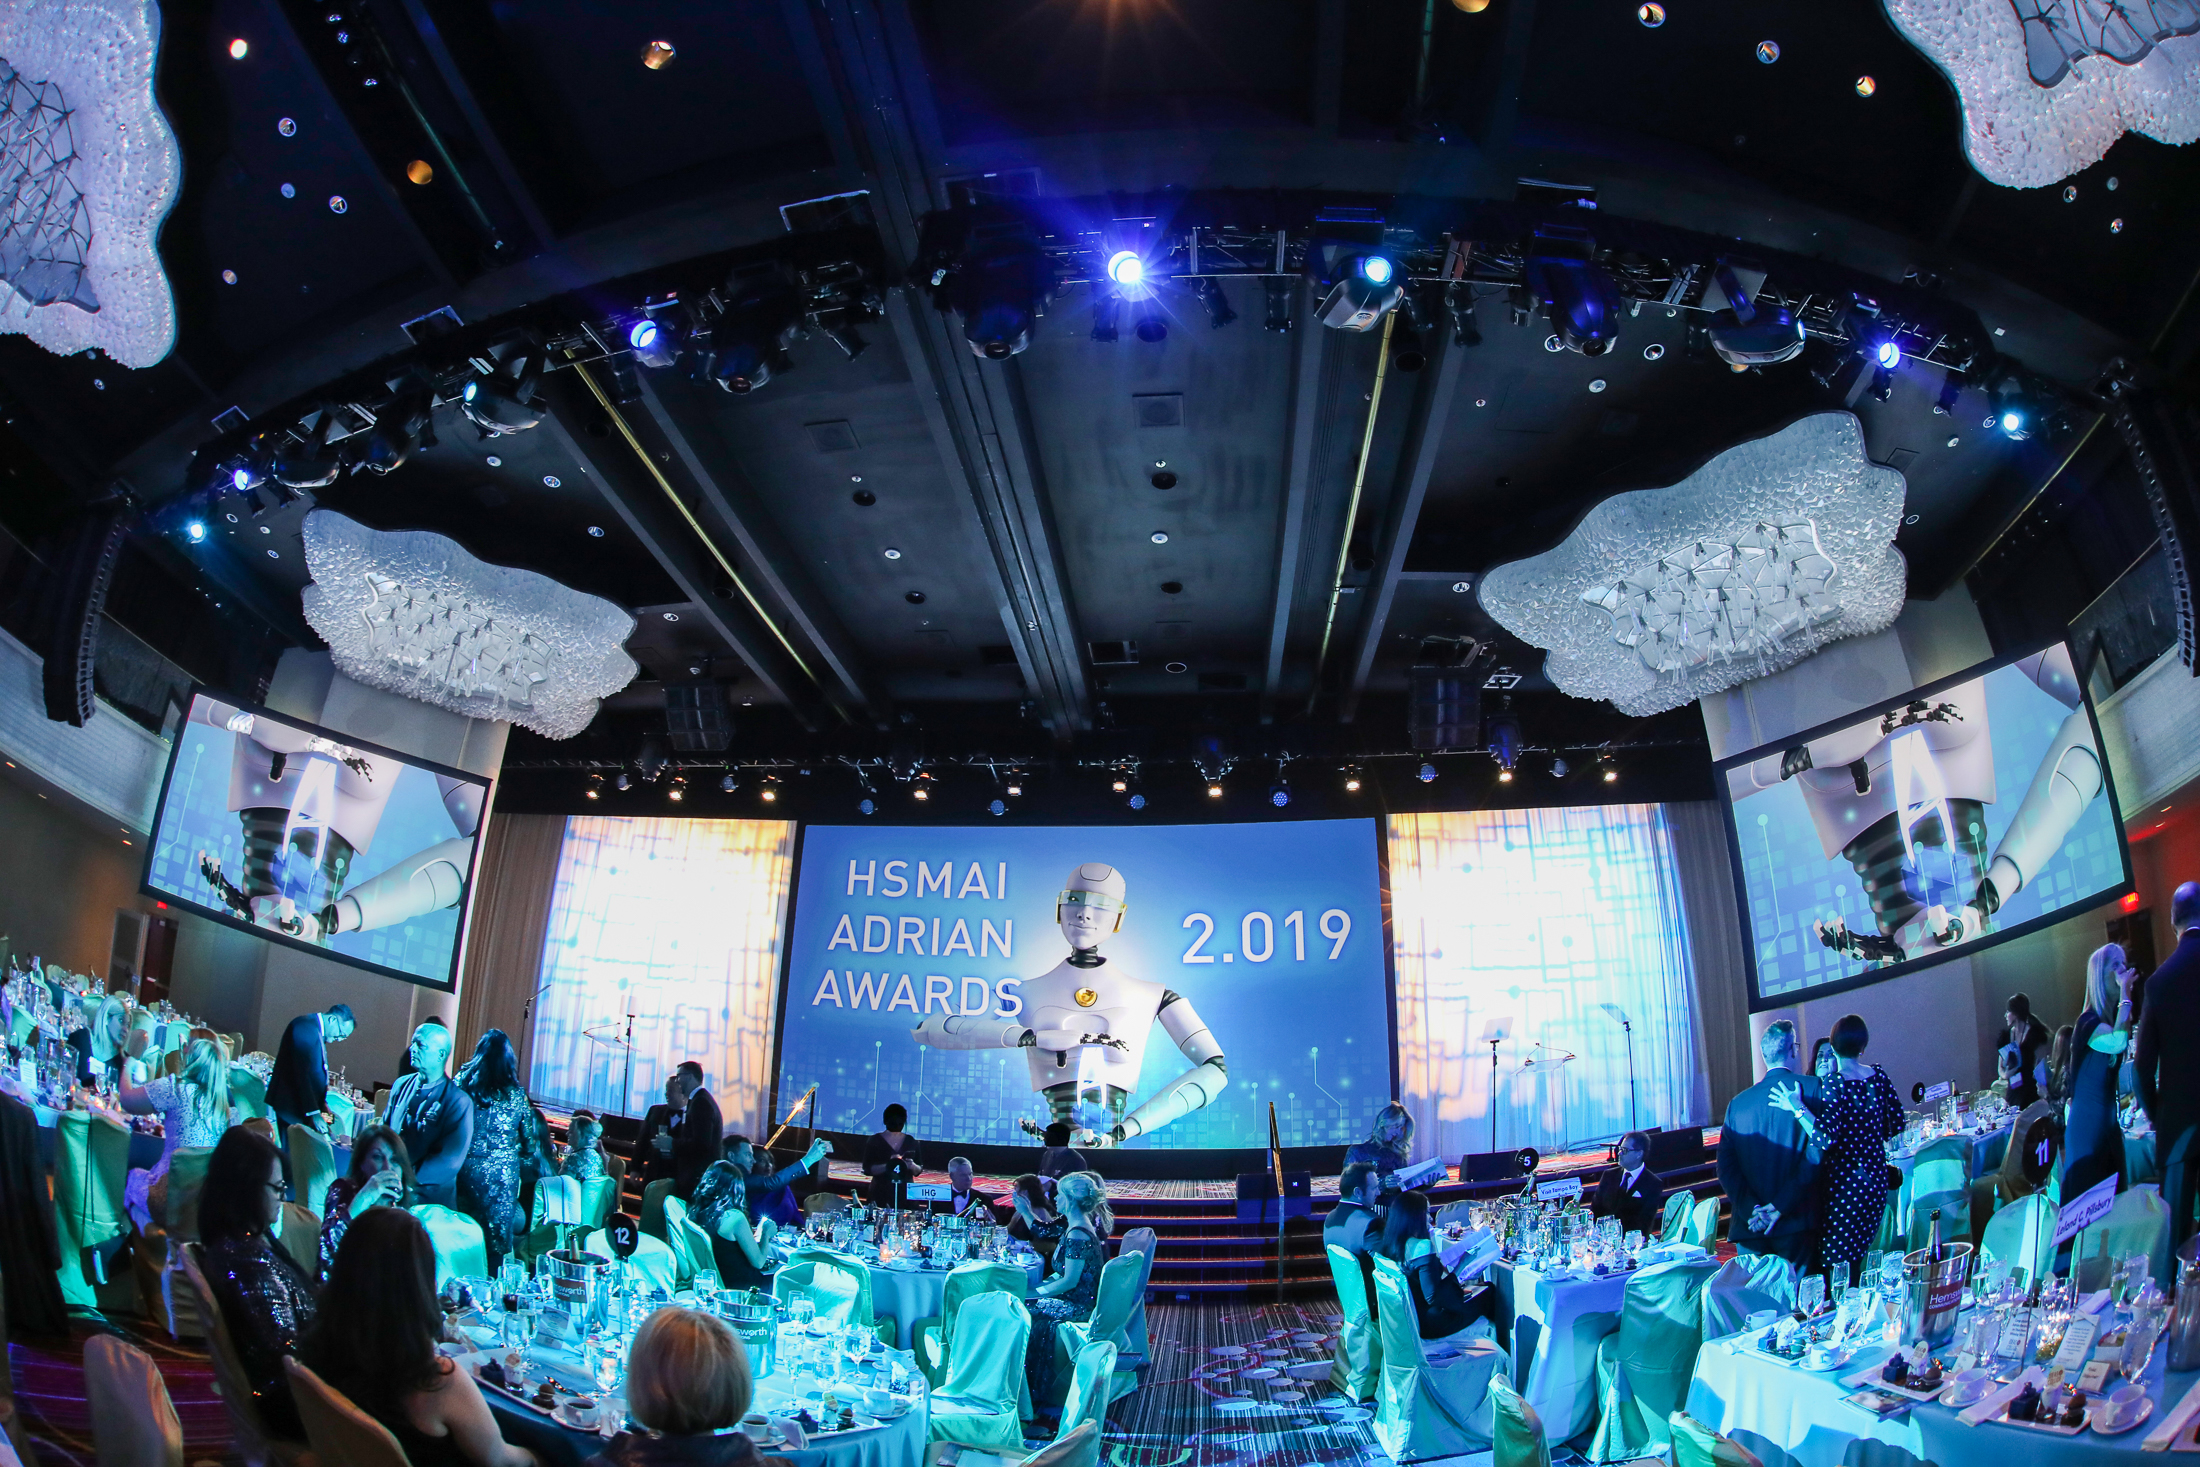 HSMAI Adrian Awards event 2020